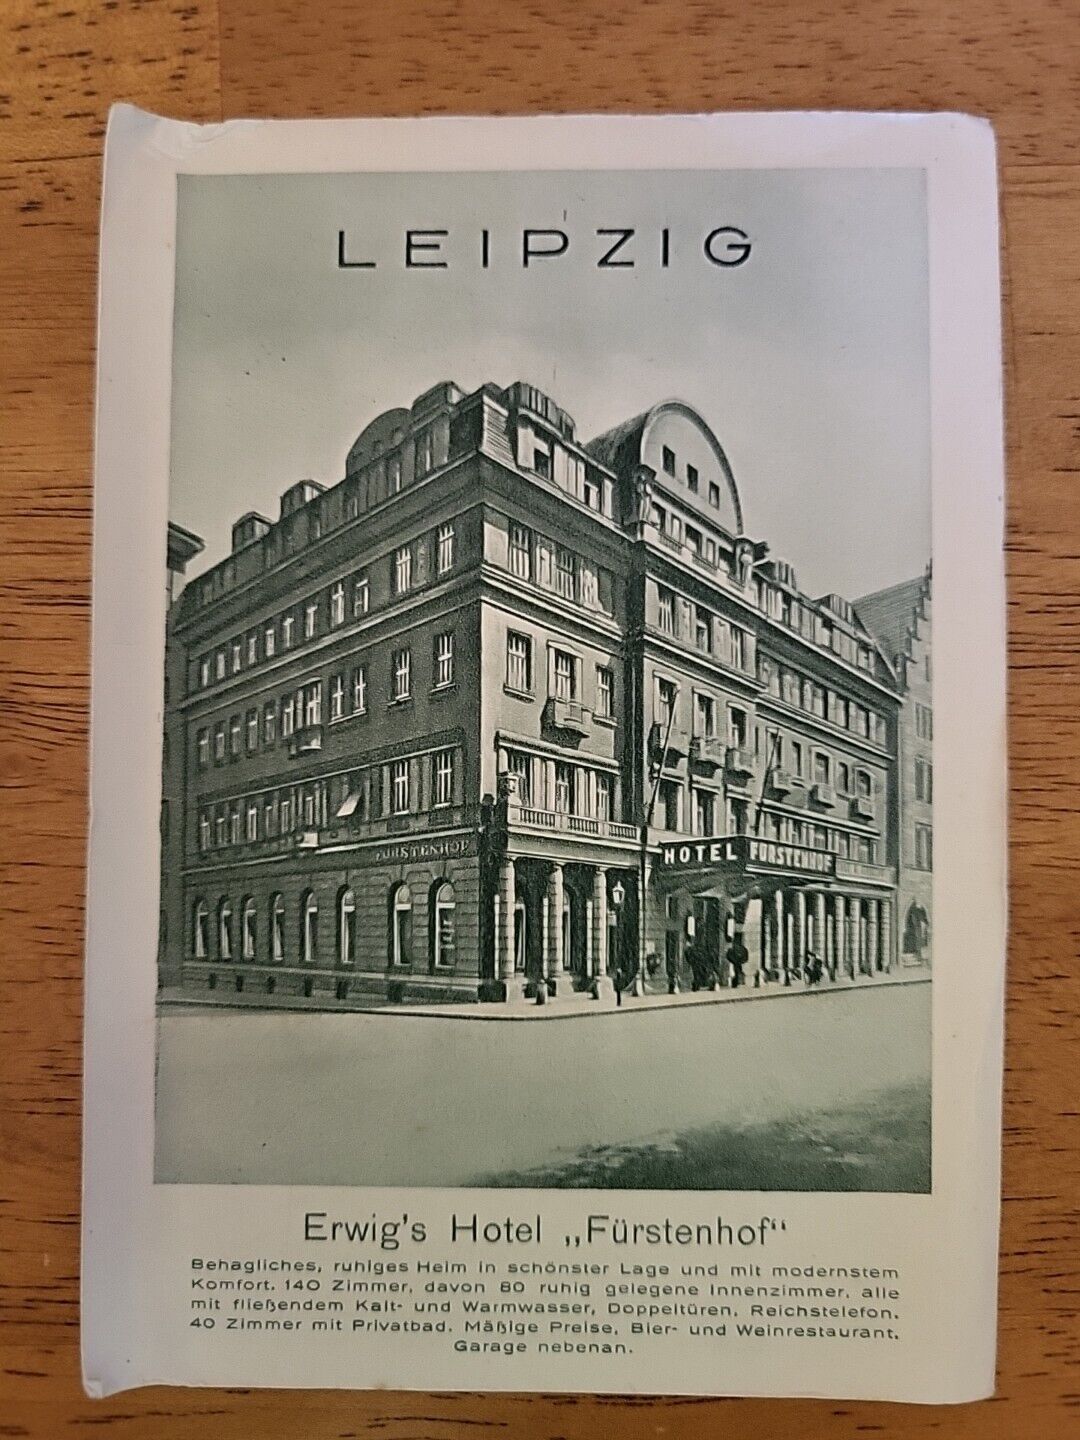 Vintage Postcard - Erwig's Hotel, Furstenhof, Leipzig, Germany